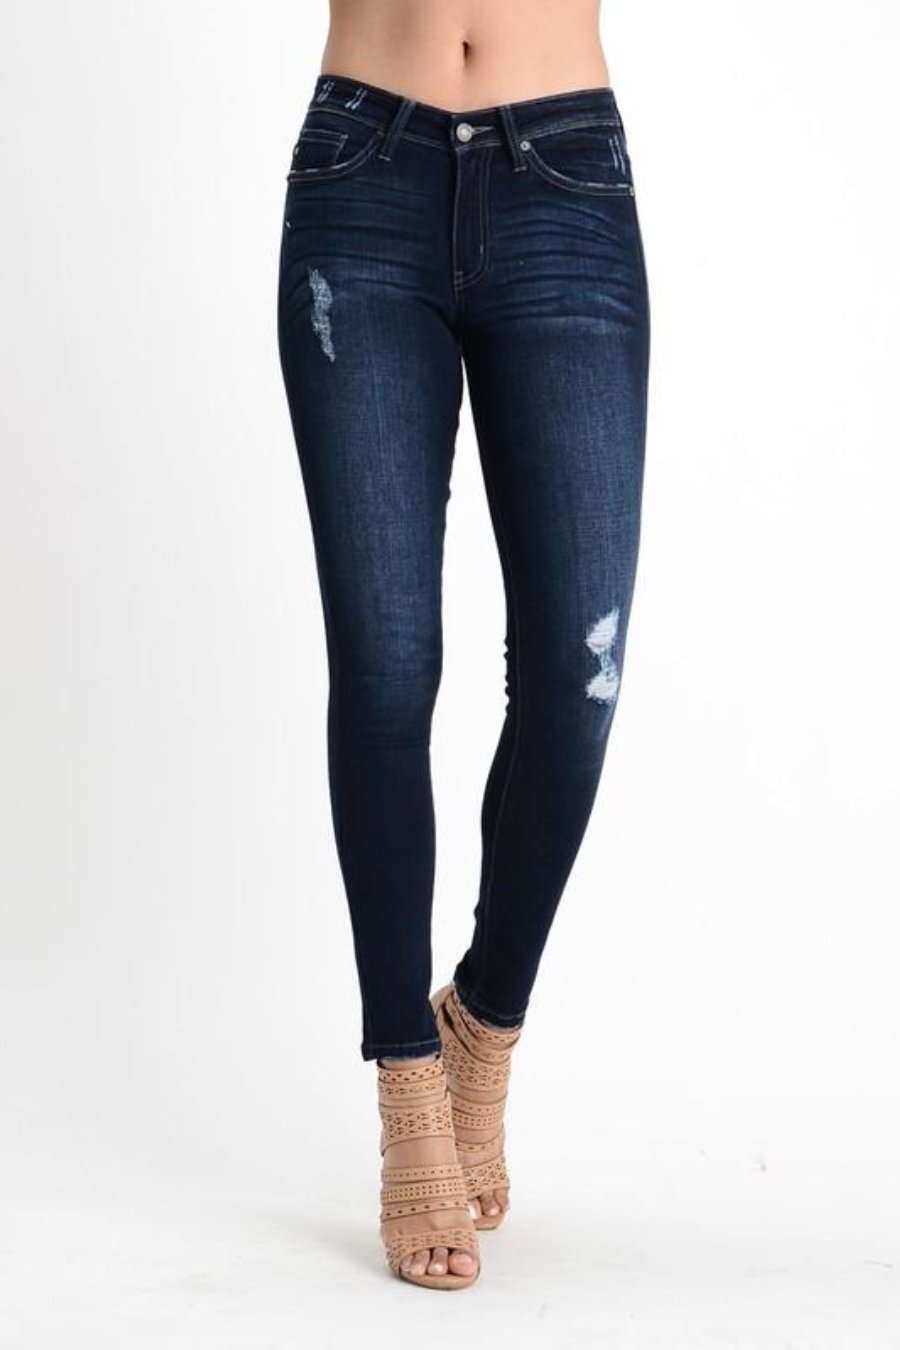 Jamie Dark Distressed Skinny Jeans - Jess Lea Boutique